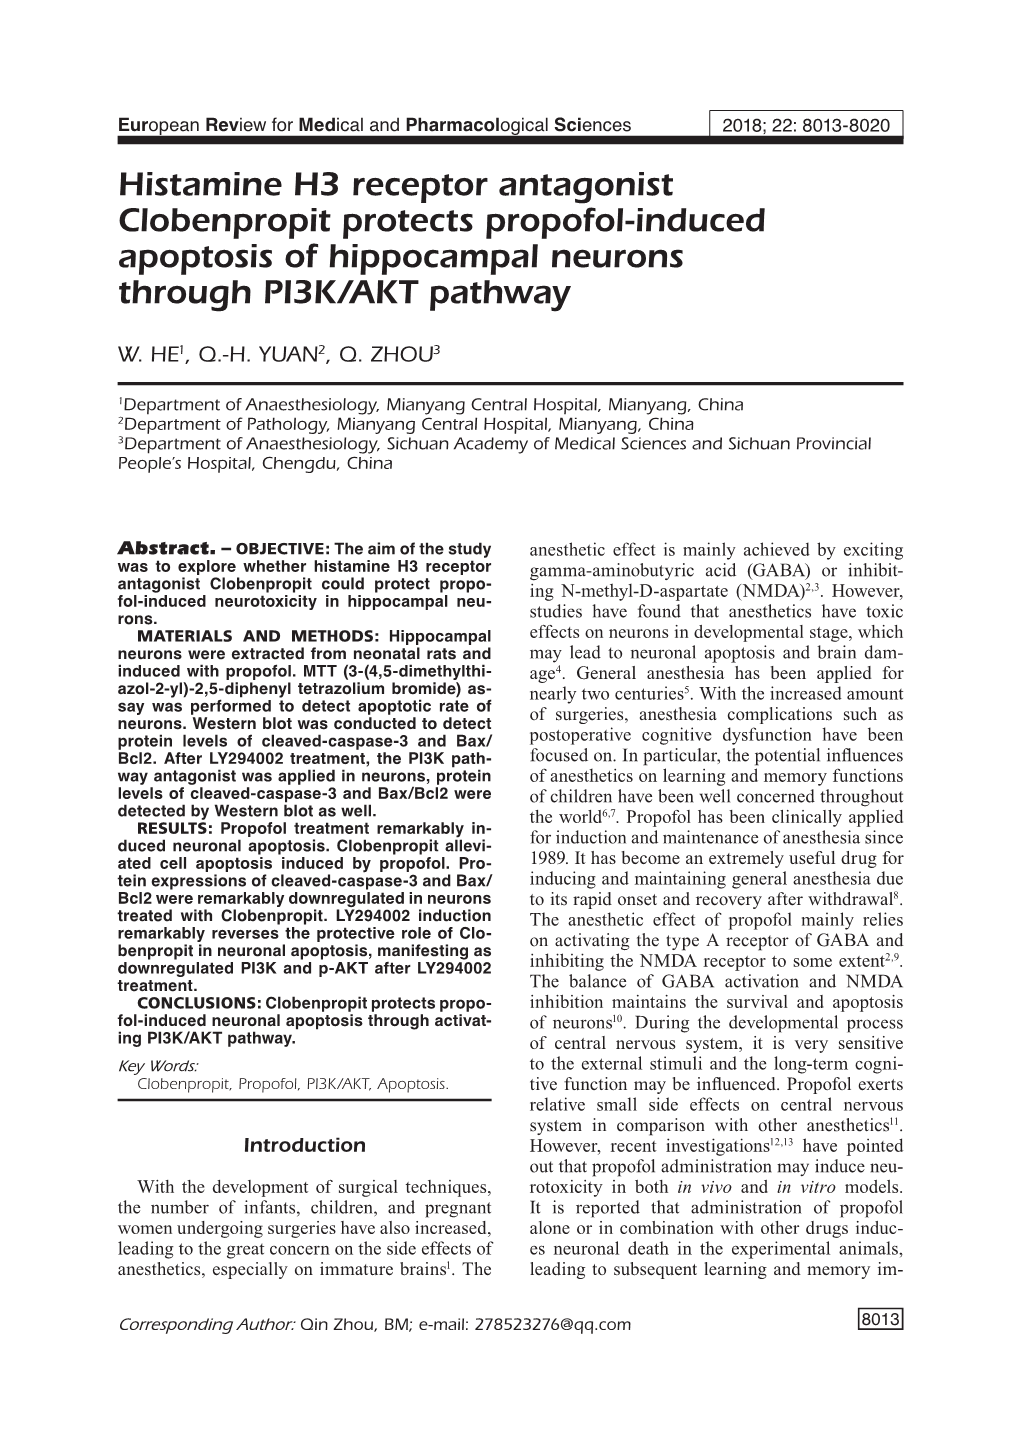 Clobenpropit Protects Propofol-Induced Neuronal Apoptosis